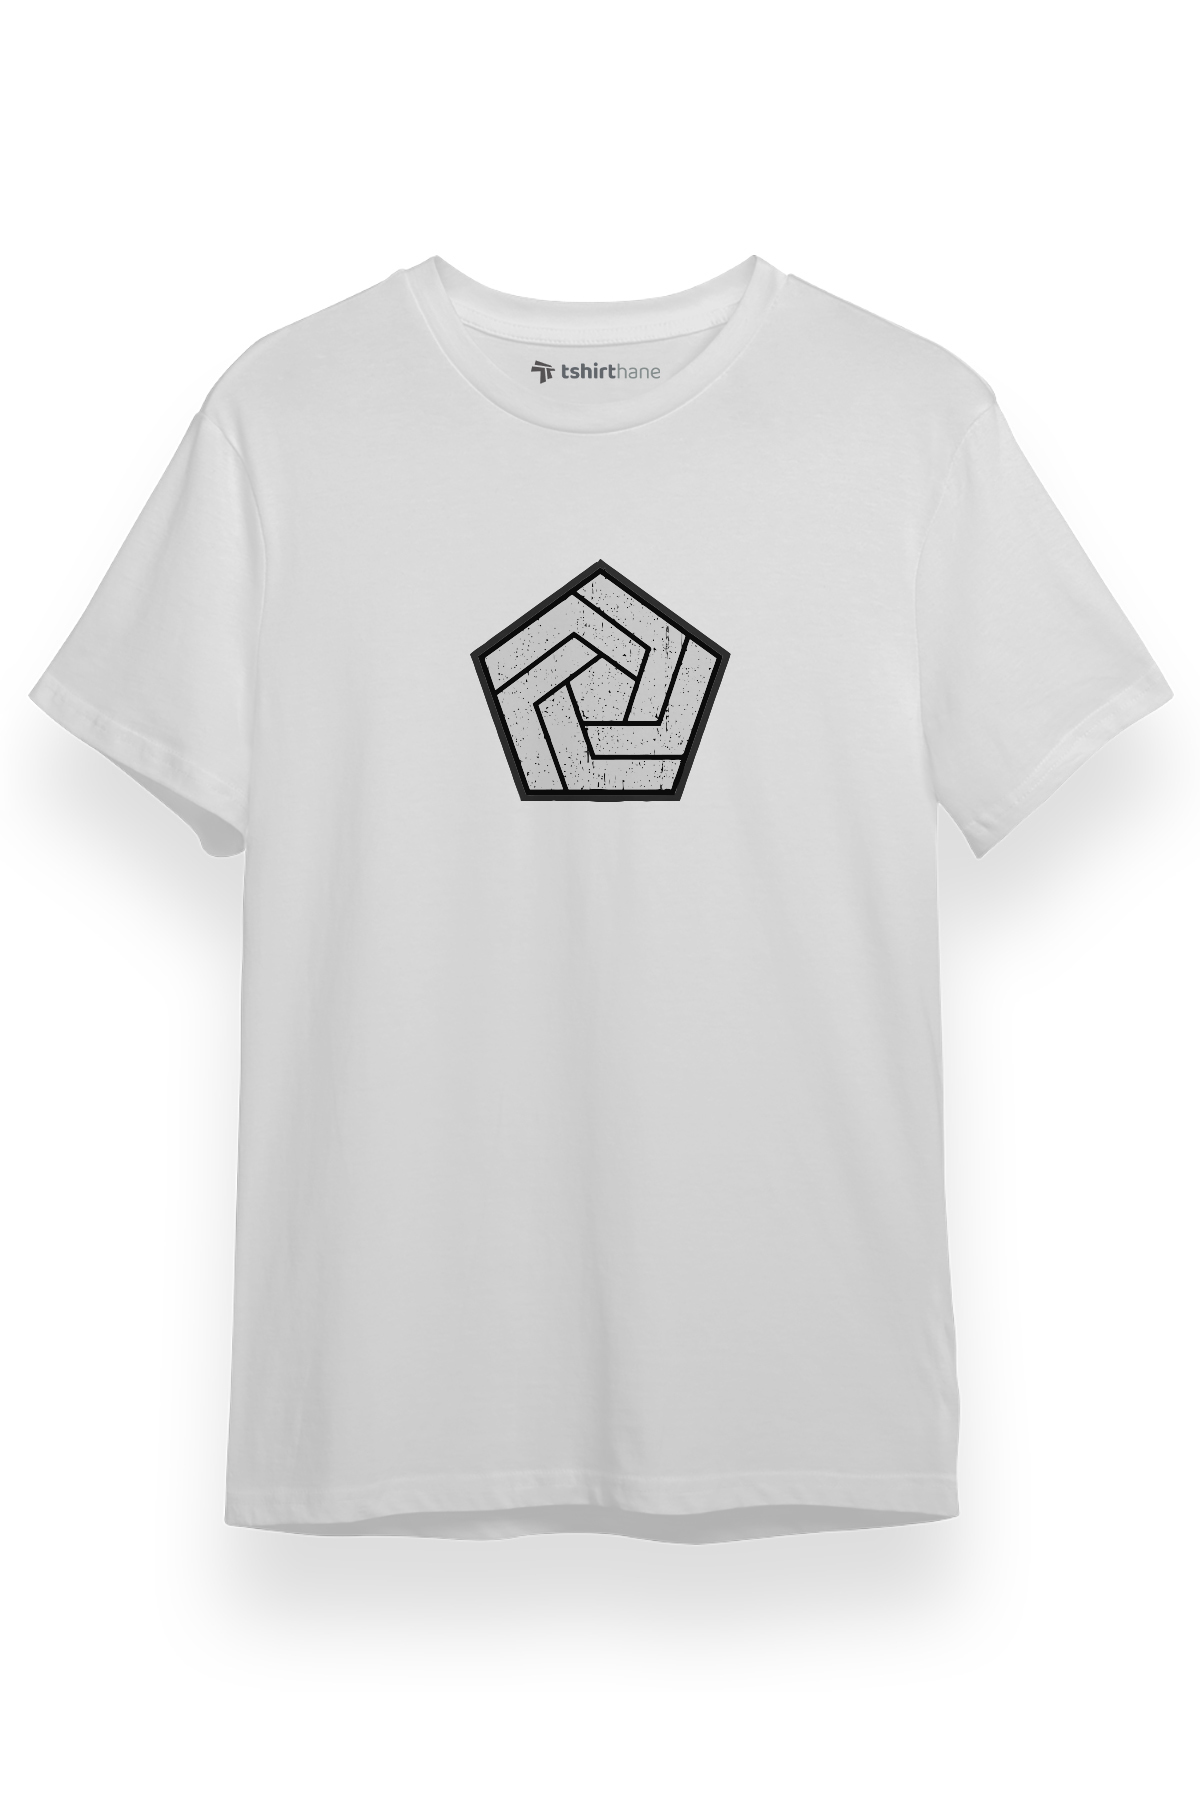 Tenet Rotas Logo Beyaz Kısa kol Erkek Tshirt